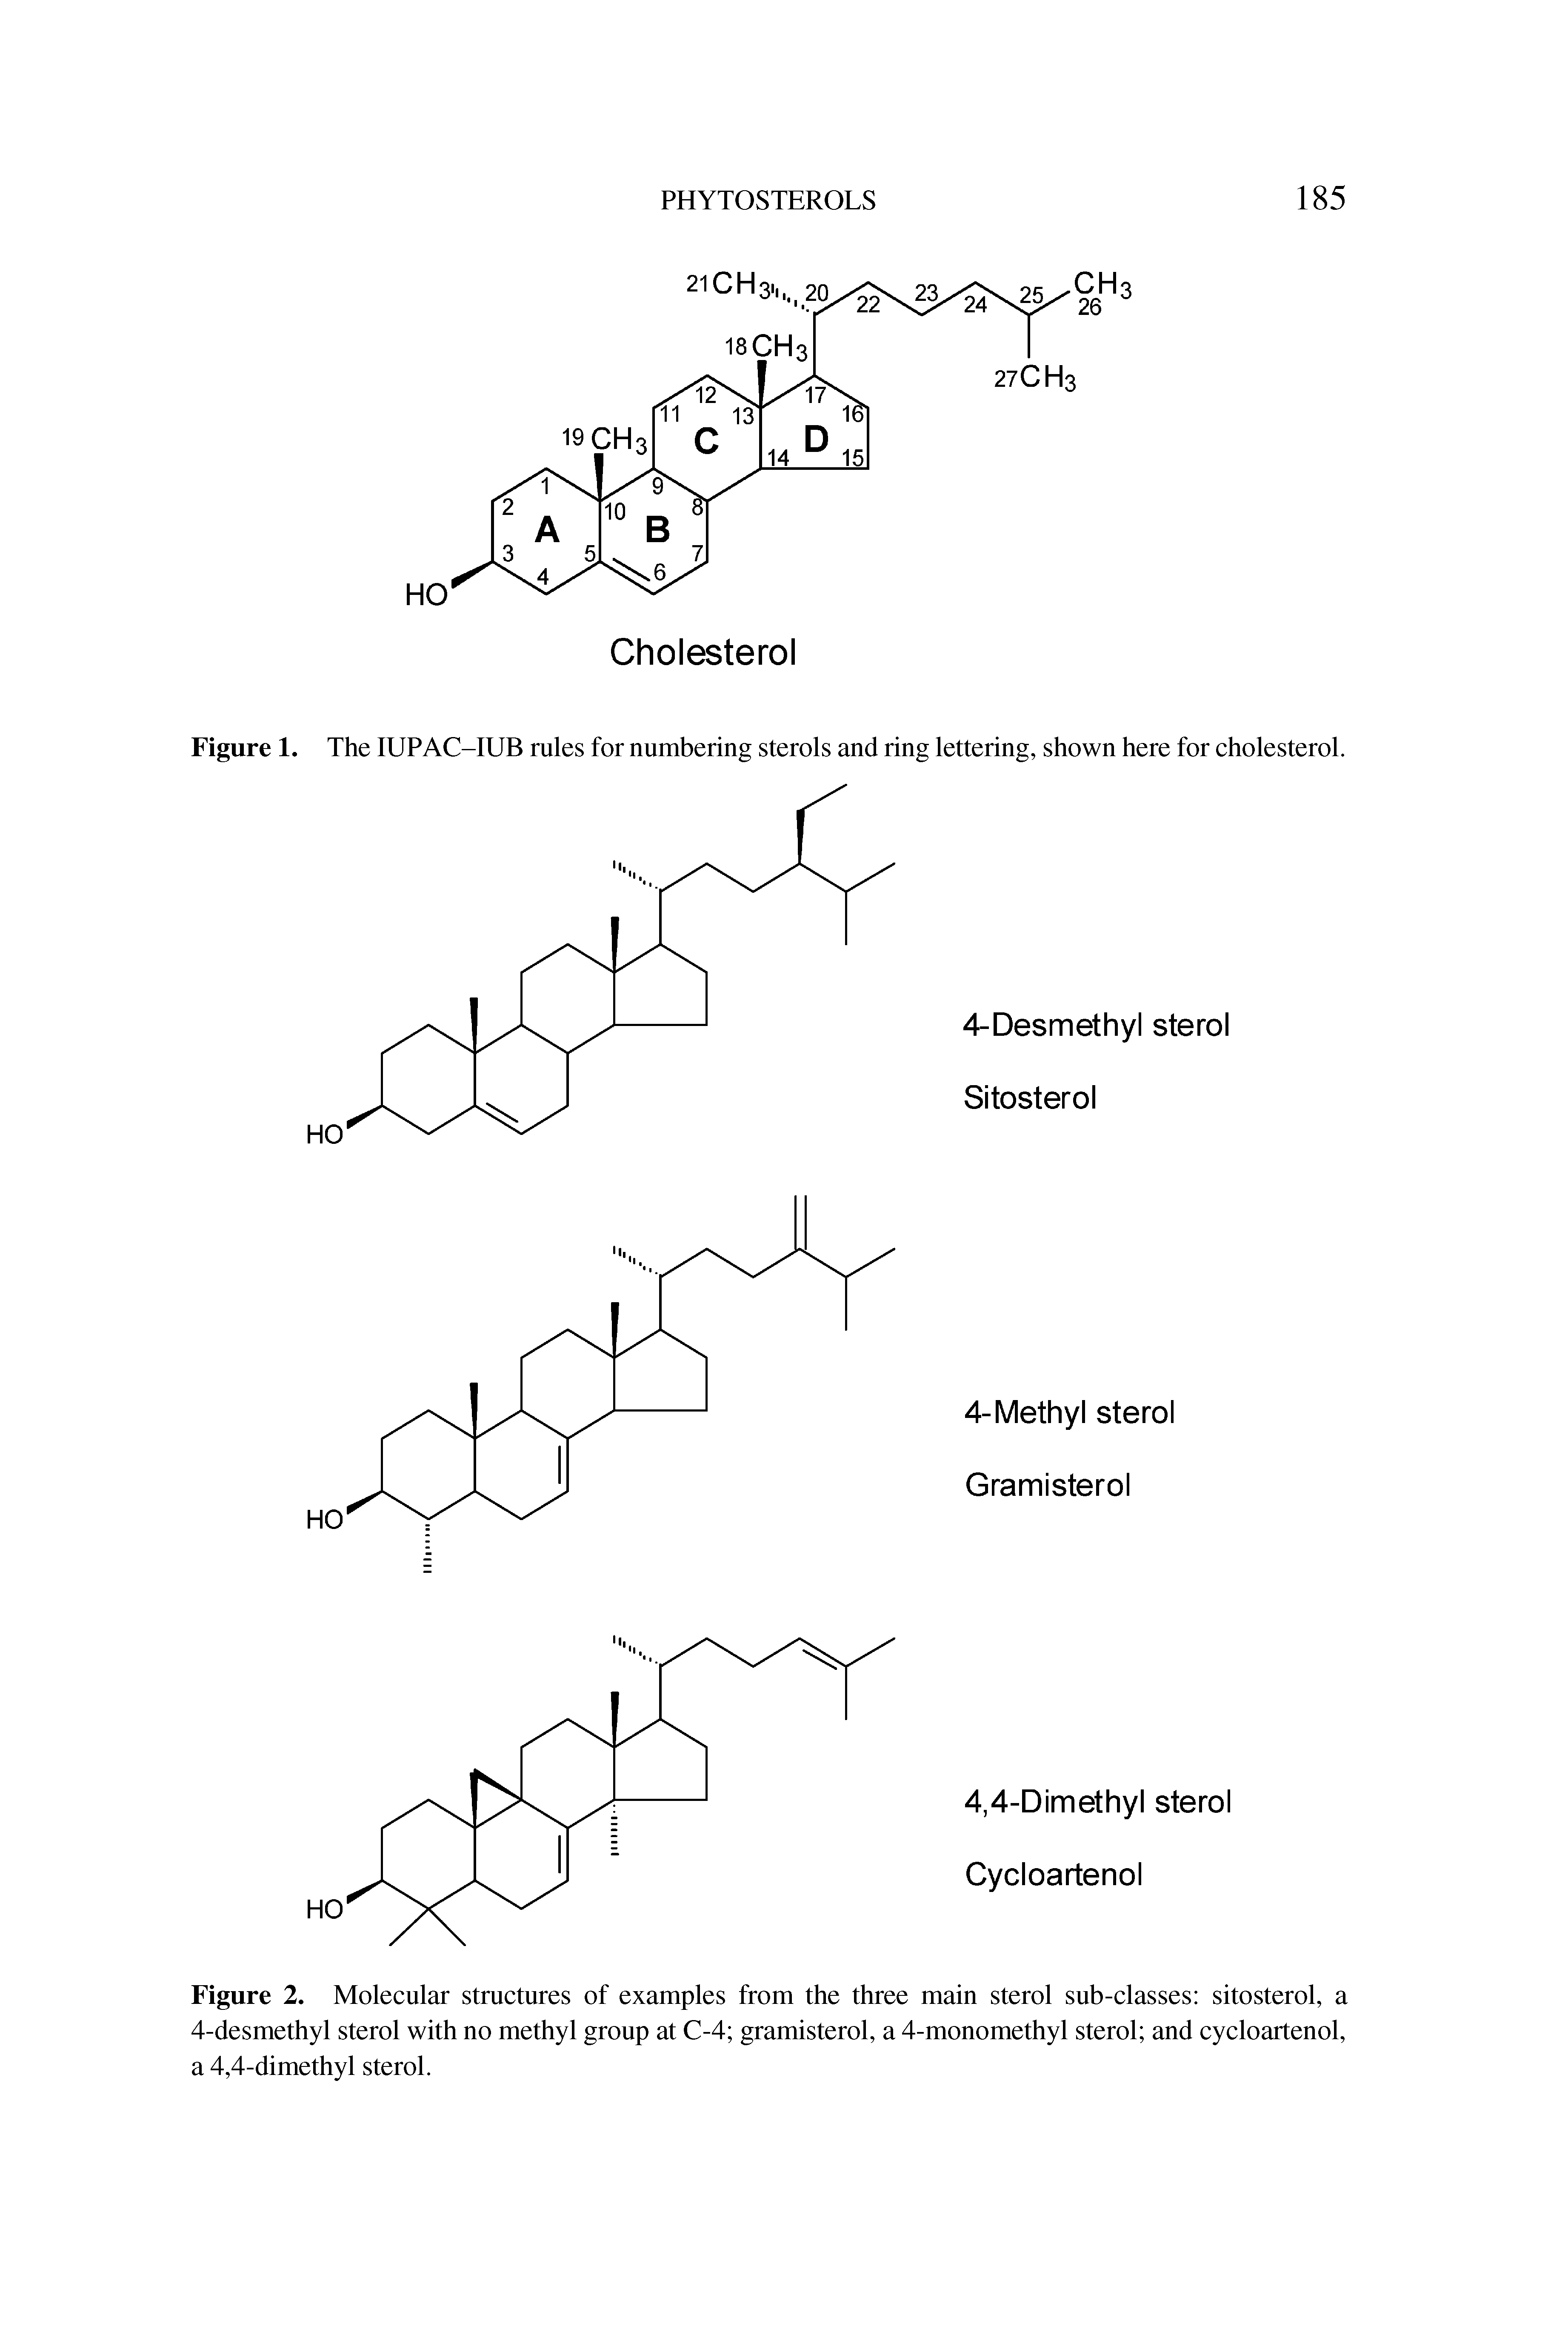 Figure 2. Moleeular struetures of examples from the three main sterol sub-elasses sitosterol, a 4-desmethyl sterol with no methyl group at C-4 gramisterol, a 4-monomethyl sterol and eyeloartenol, a 4,4-dimethyl sterol.